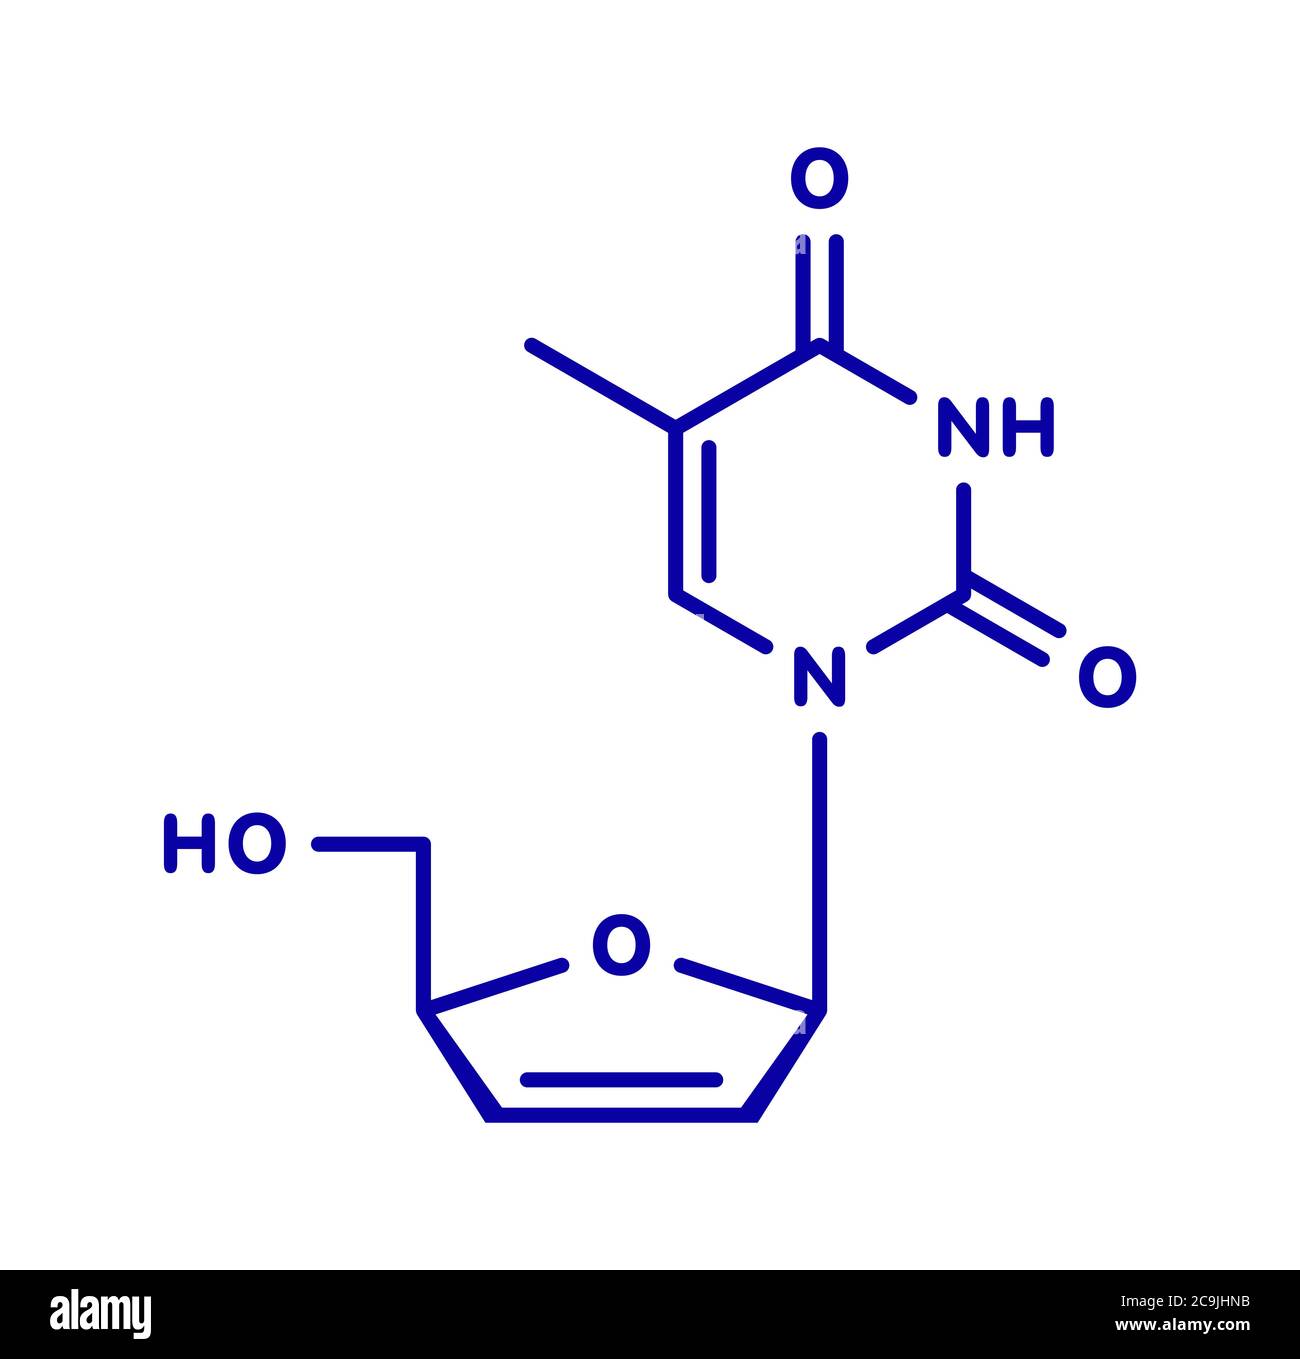 https://c8.alamy.com/comp/2C9JHNB/stavudine-d4t-hiv-drug-molecule-thymidine-analogue-that-blocks-reverse-transcriptase-blue-skeletal-formula-on-white-background-2C9JHNB.jpg